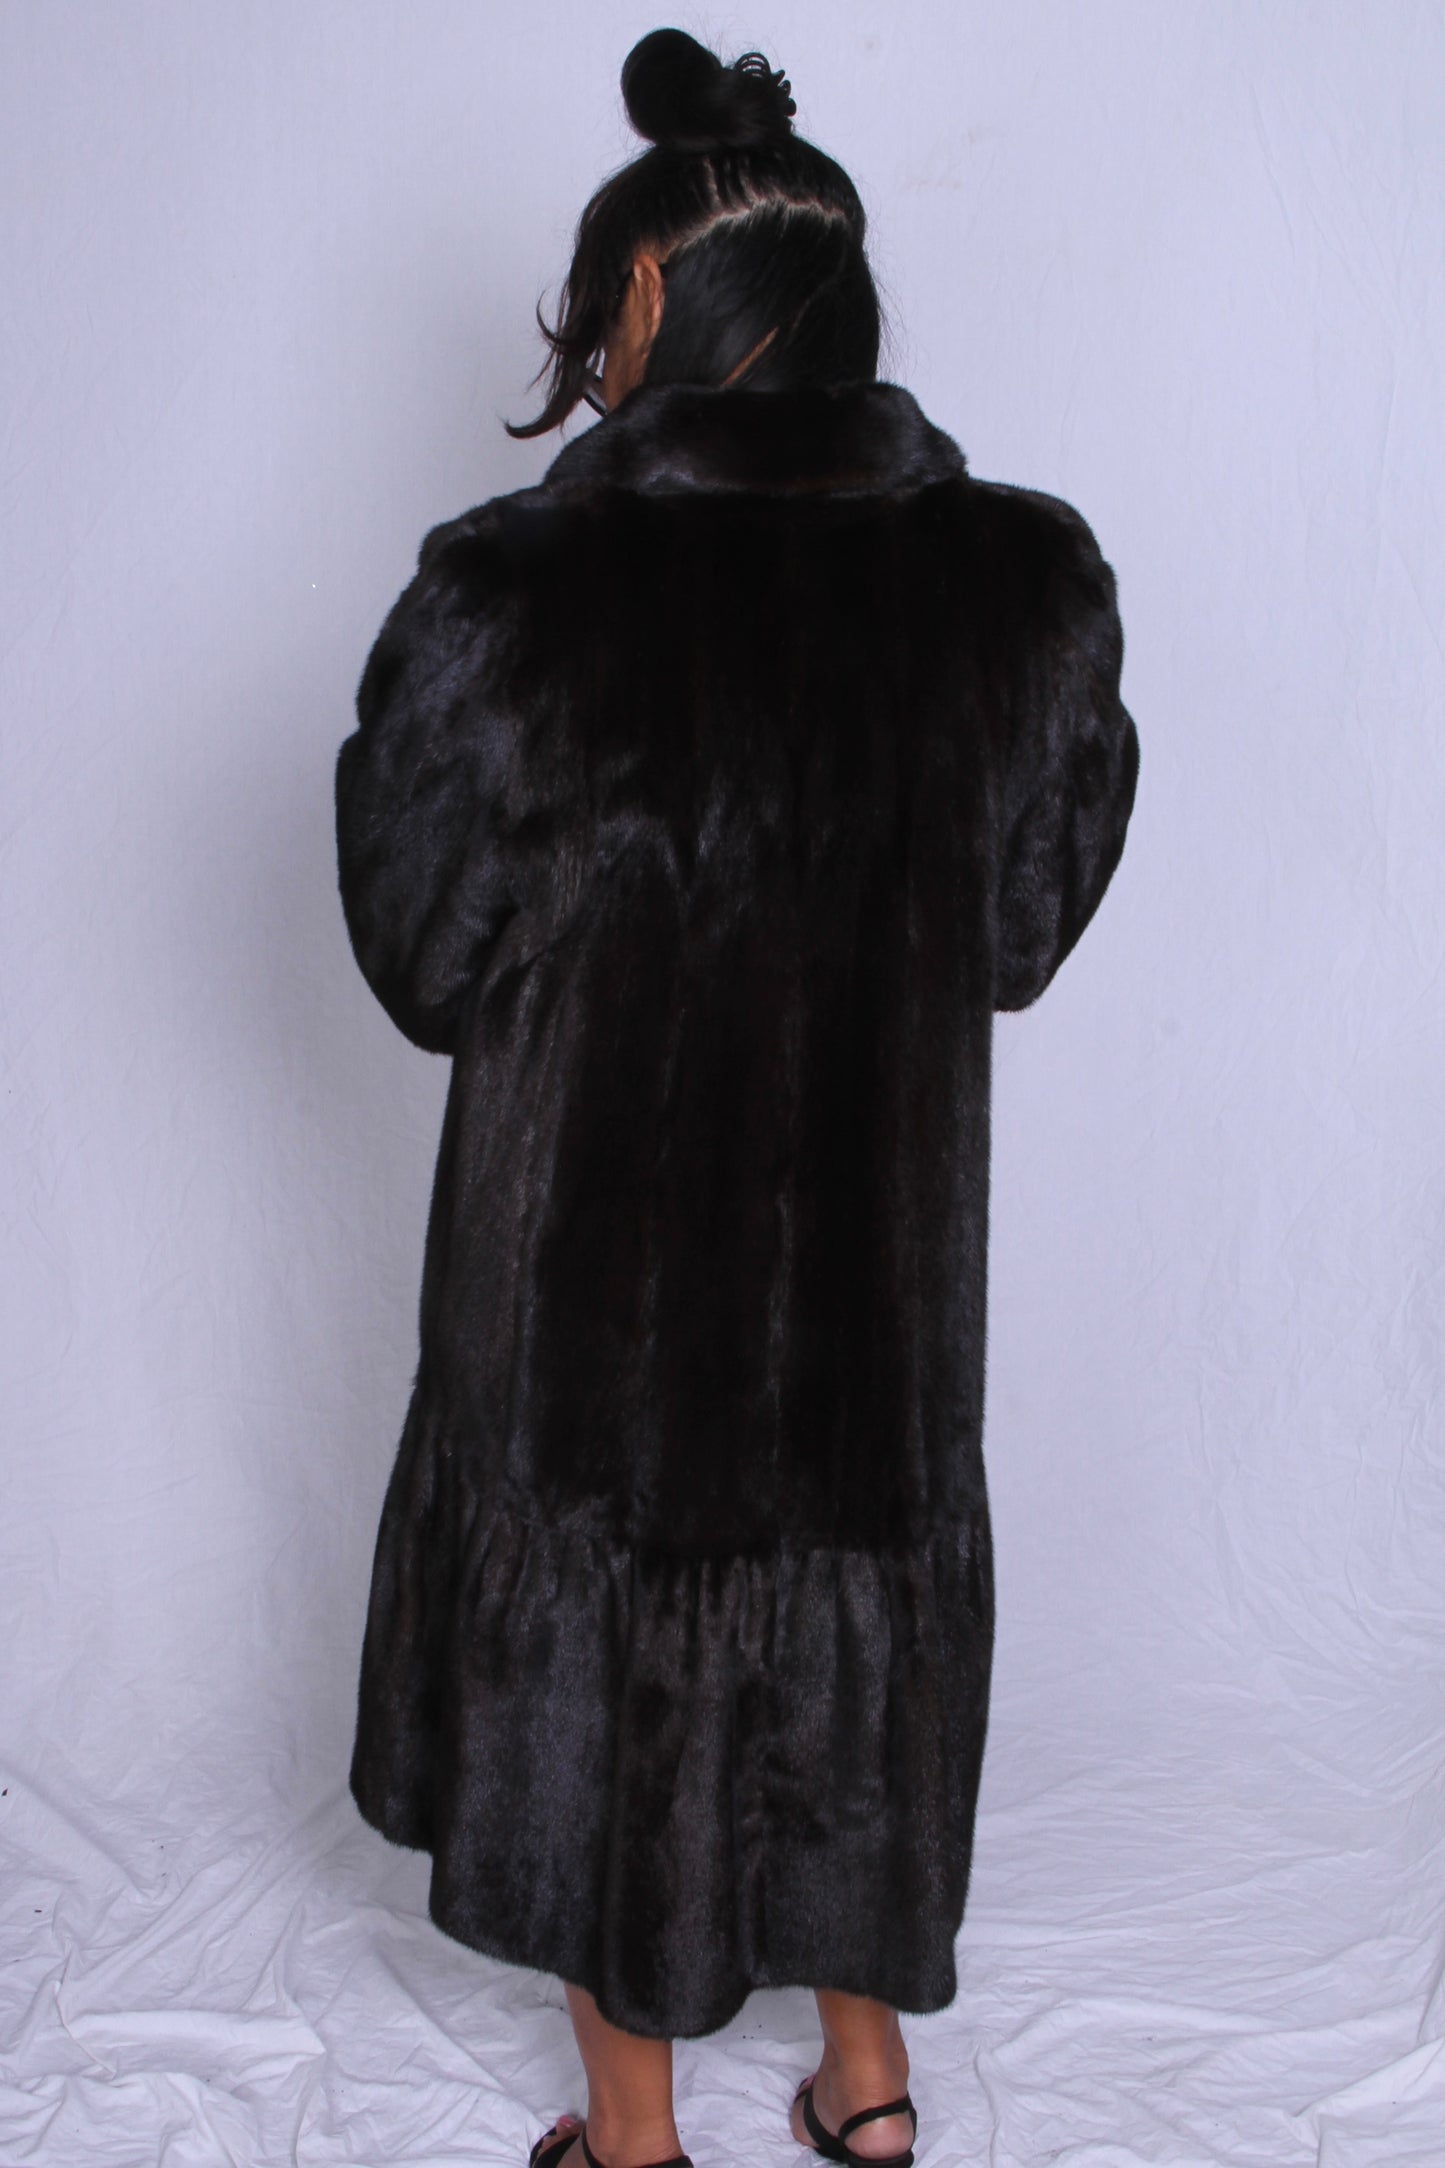 Blackglama Coat w/ Skirt Bottom